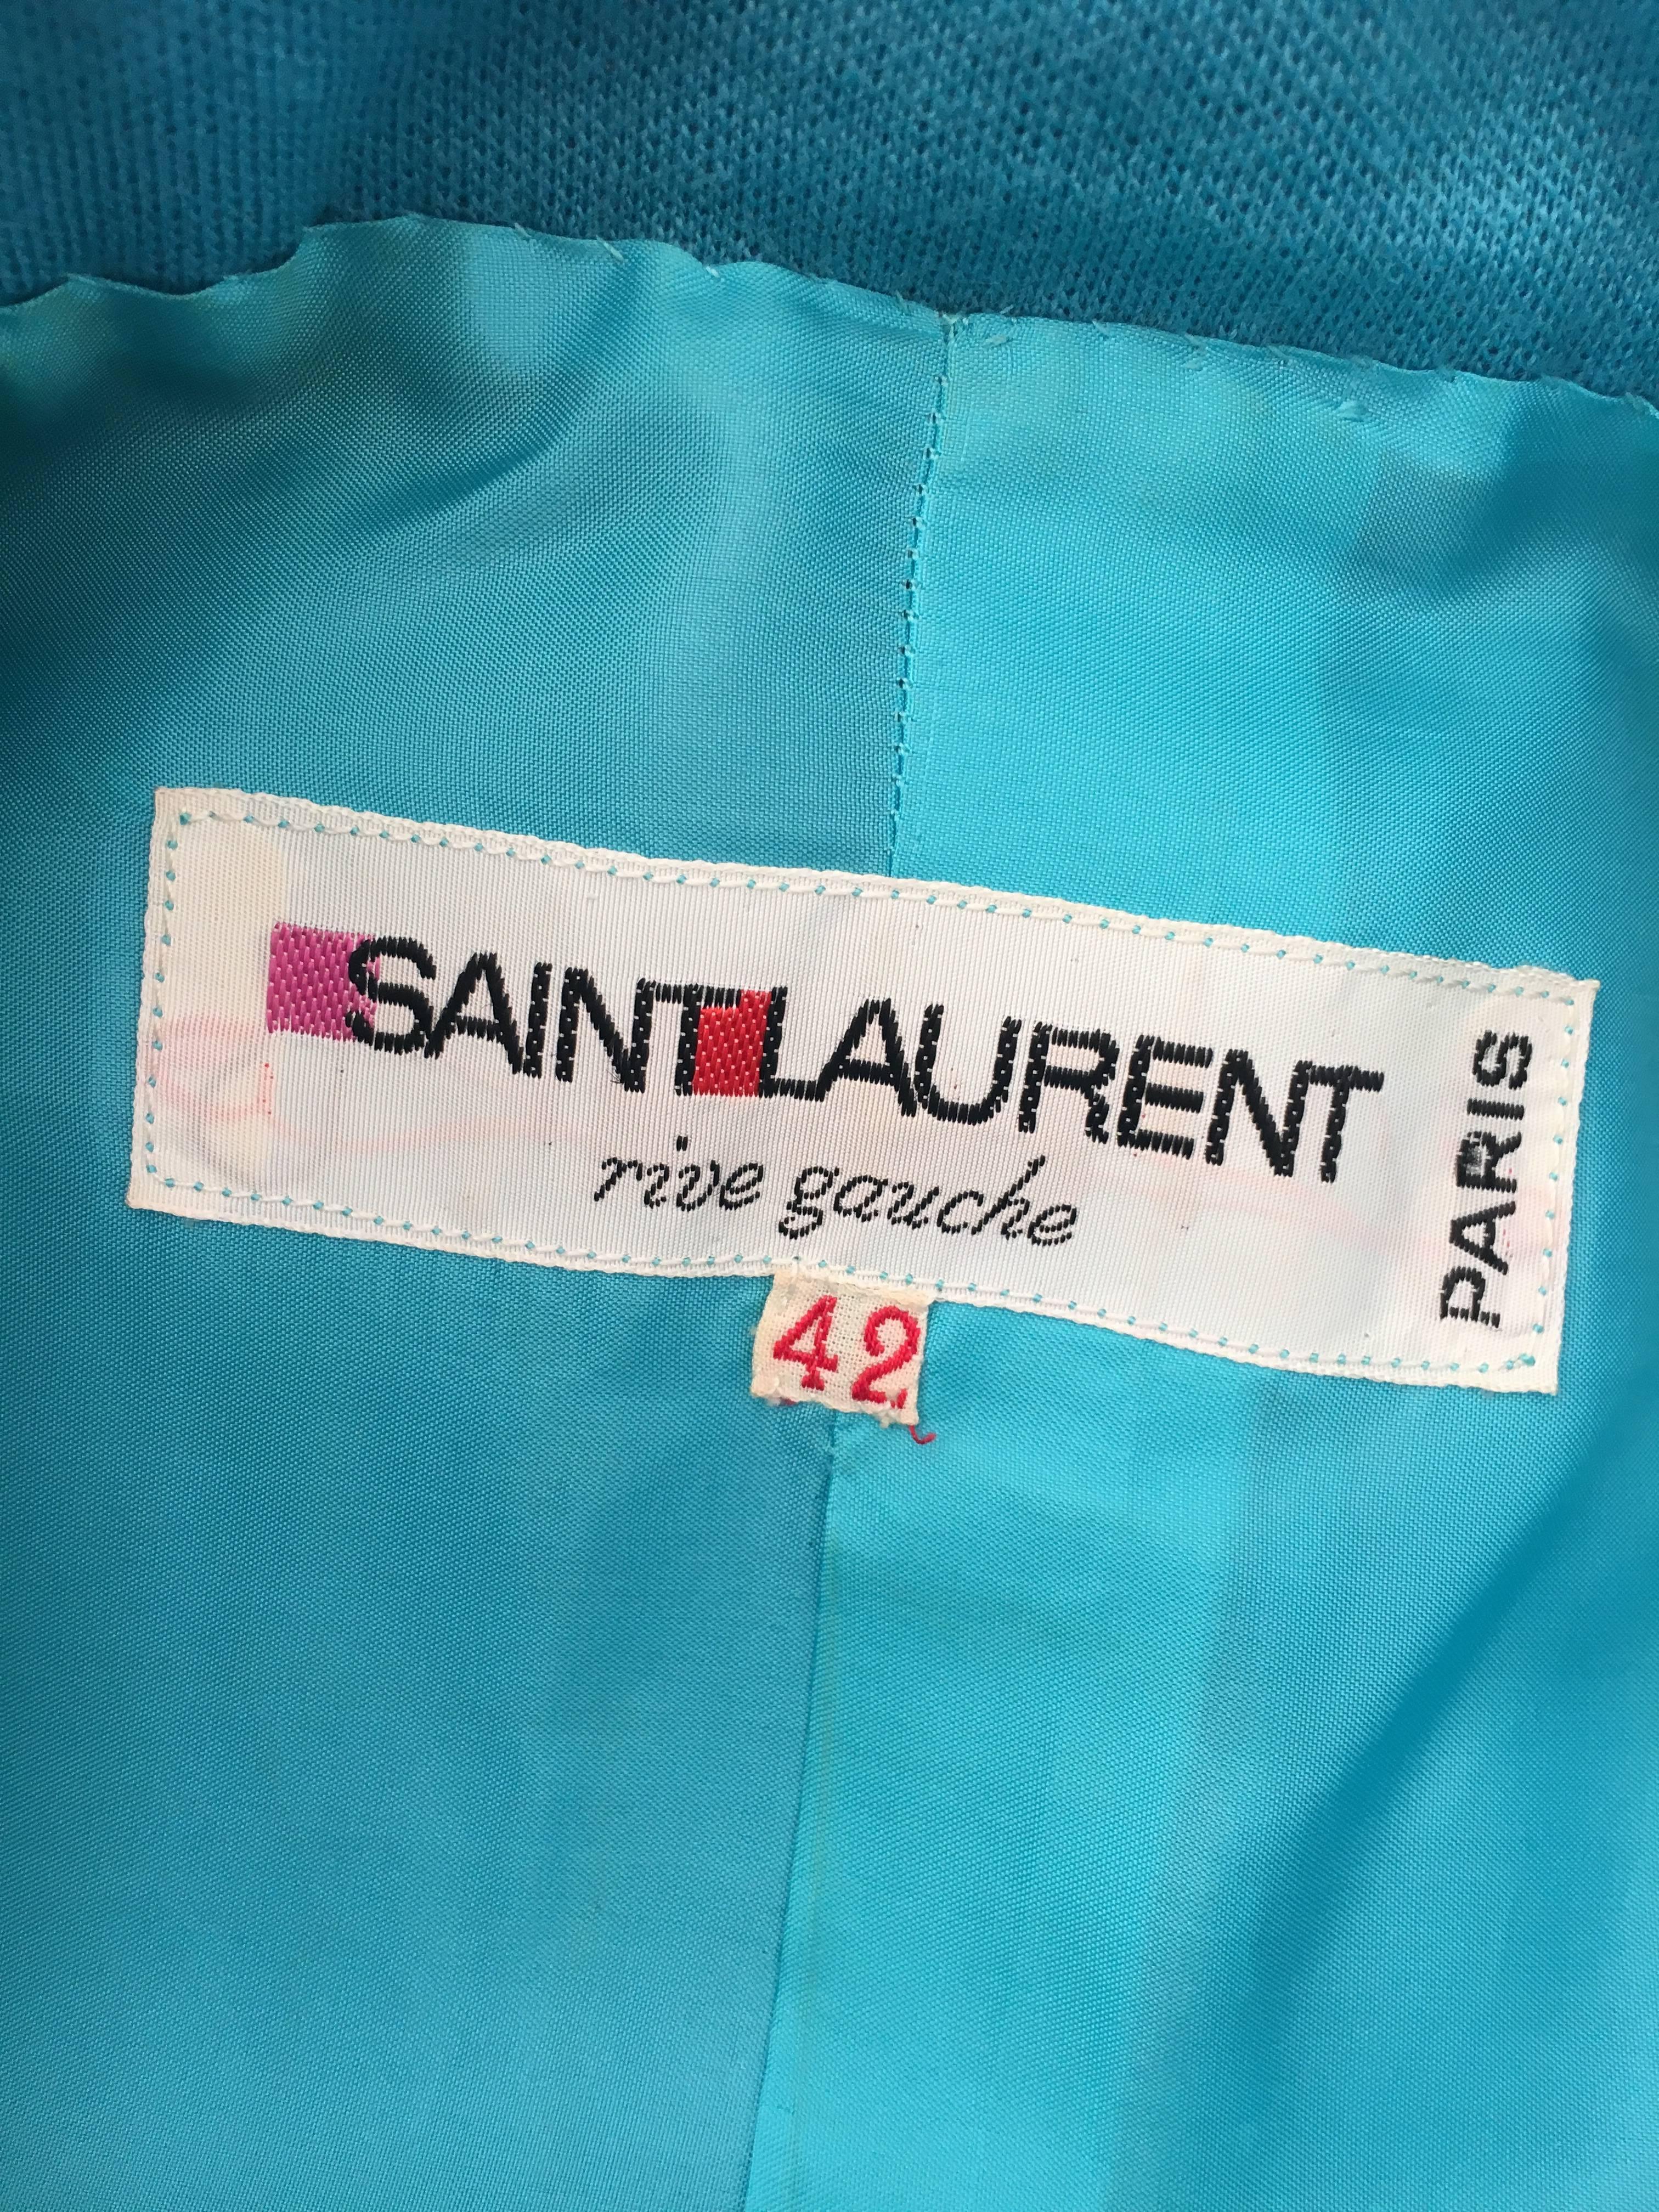 Yves Saint Laurent Rive Gauche 1970's Turquoise Chemise Dress For Sale 2